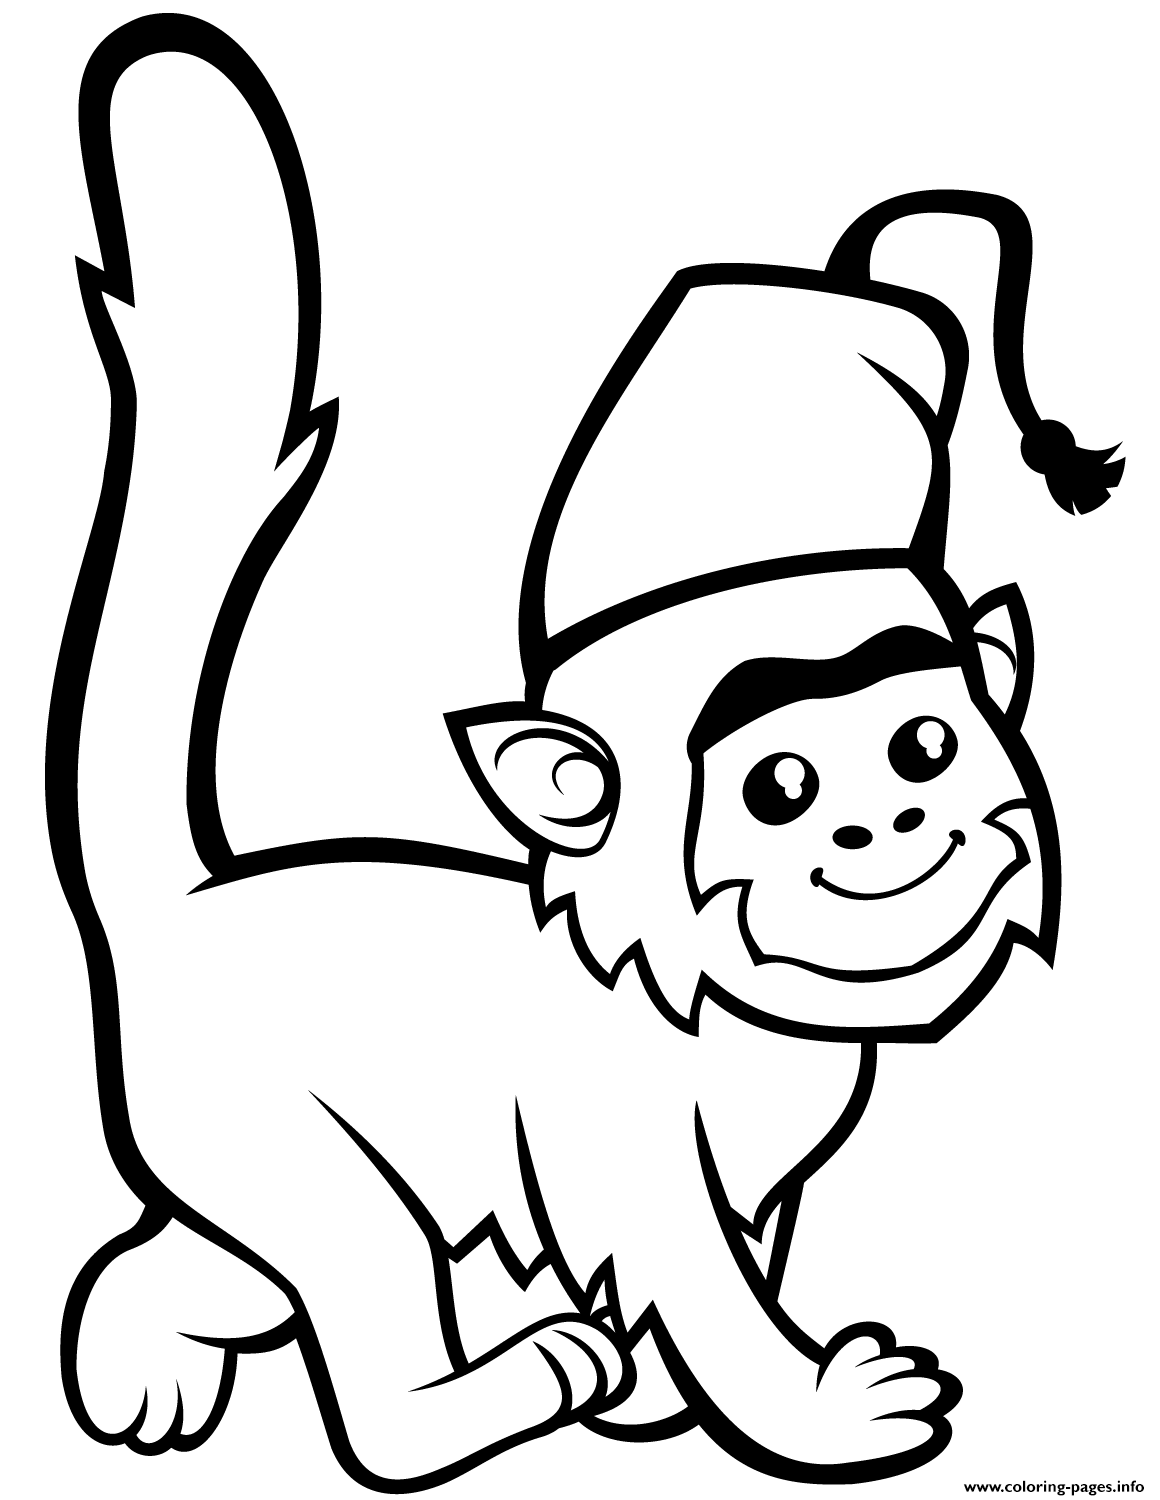 Cute Monkey In Fez coloring